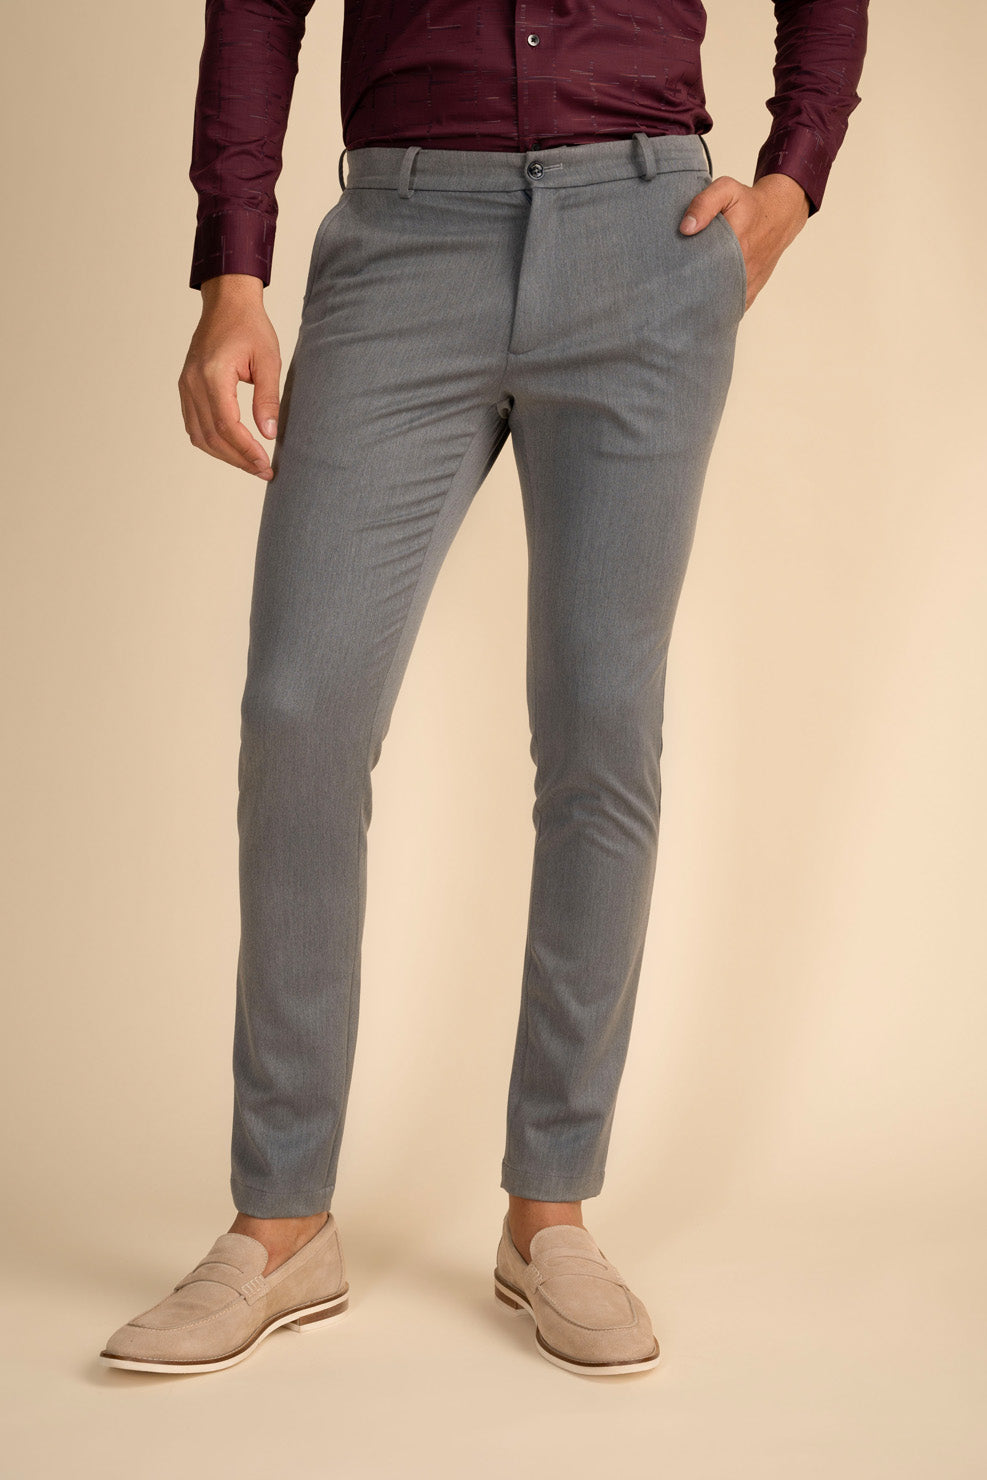 Grey 4-Way Stretch Flex Pro Pants